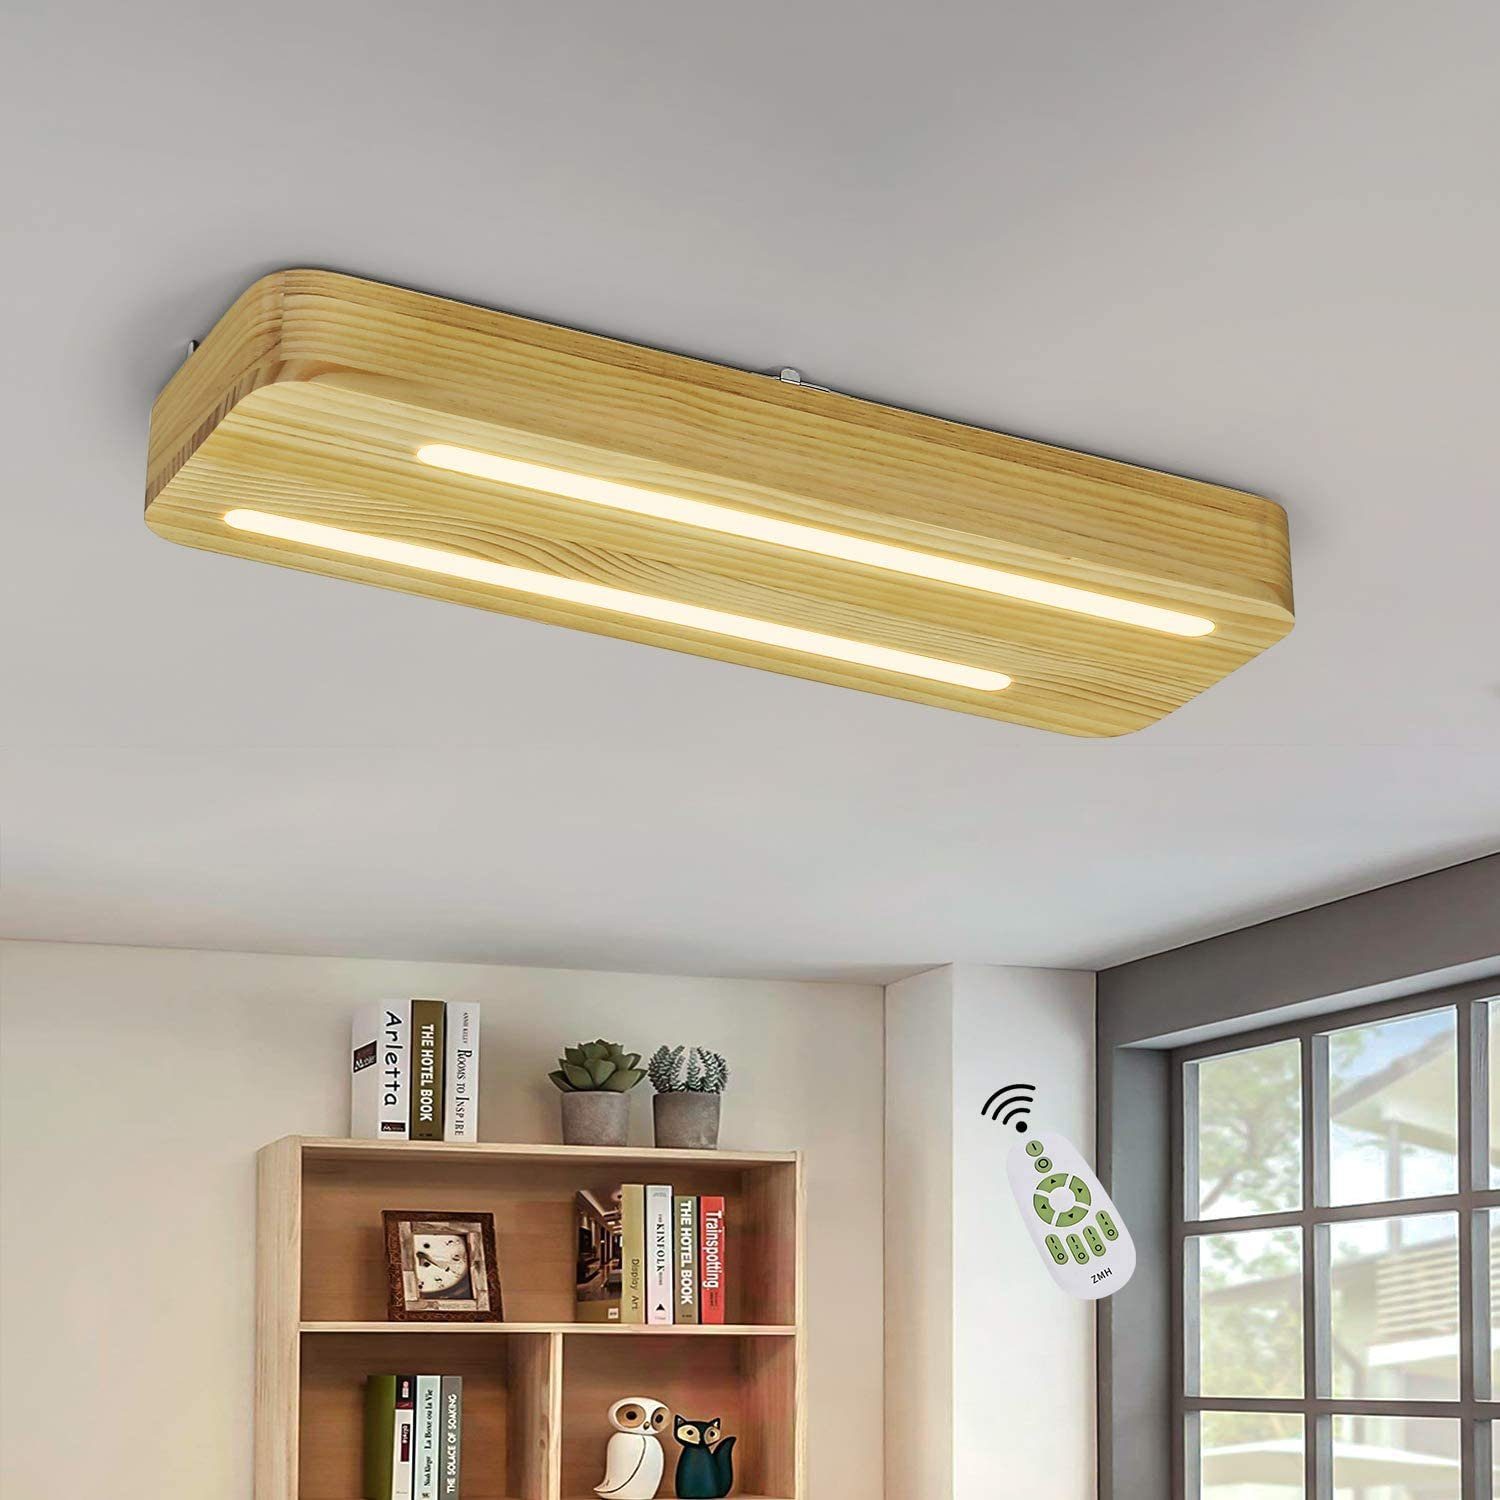 ZMH LED Deckenleuchte Holz Acryl Quadratisch Wohnzimmerlampe Flurlampe, Farbwechsel, LED fest integriert